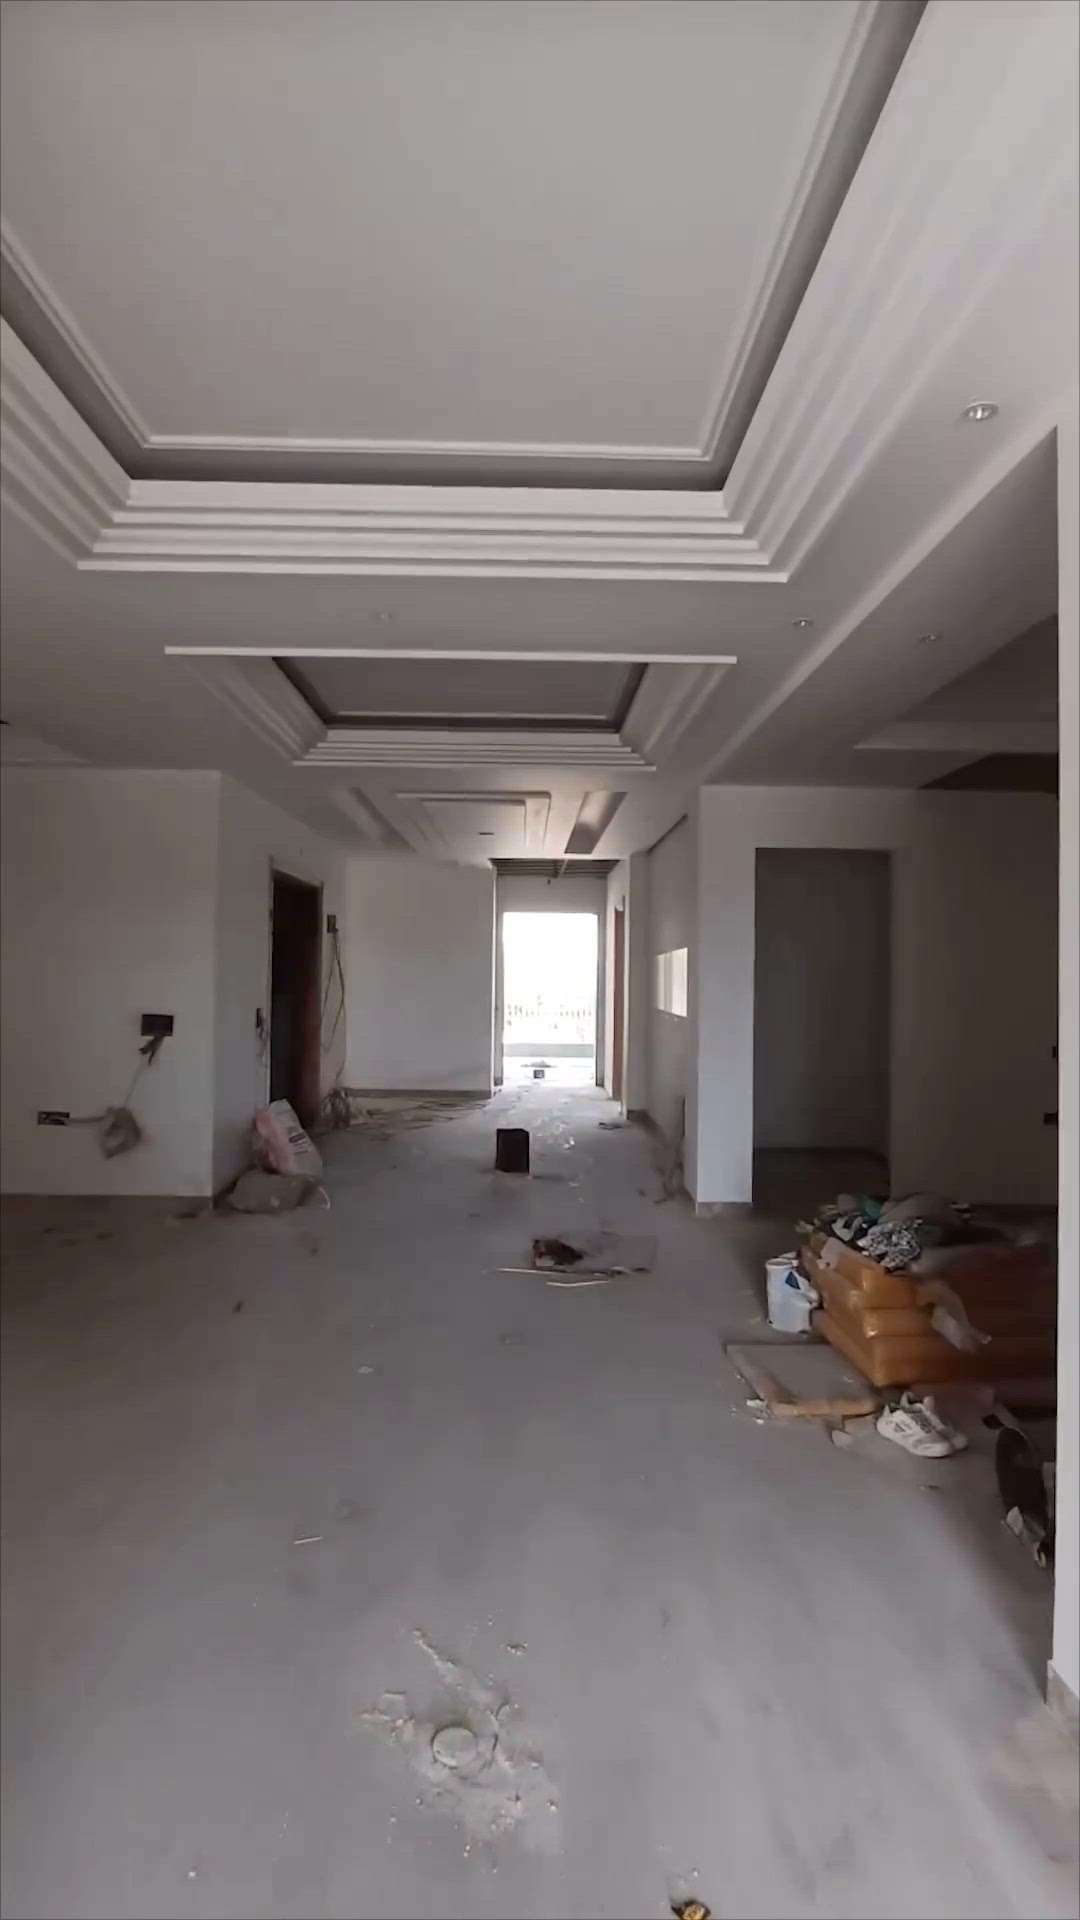 Work In Progress ❤️
8077017254
 #InteriorDesigner  #KitchenInterior  #Architectural&Interior  #LUXURY_INTERIOR  #interiorrenovation  #interiorghaziabad  #delhi  #meerut  #hapur  #noida  #greaternoida  #GreaterFaridabad  #bhagpat  #meerut  #gaziabad  #hapur  #painters  #Carpenter  #carpenters  #popceiling  #FalseCeiling  #FalseCeiling_llighting_flooring  #FlooringTiles  #FlooringSolutions  #LUXURY_INTERIOR